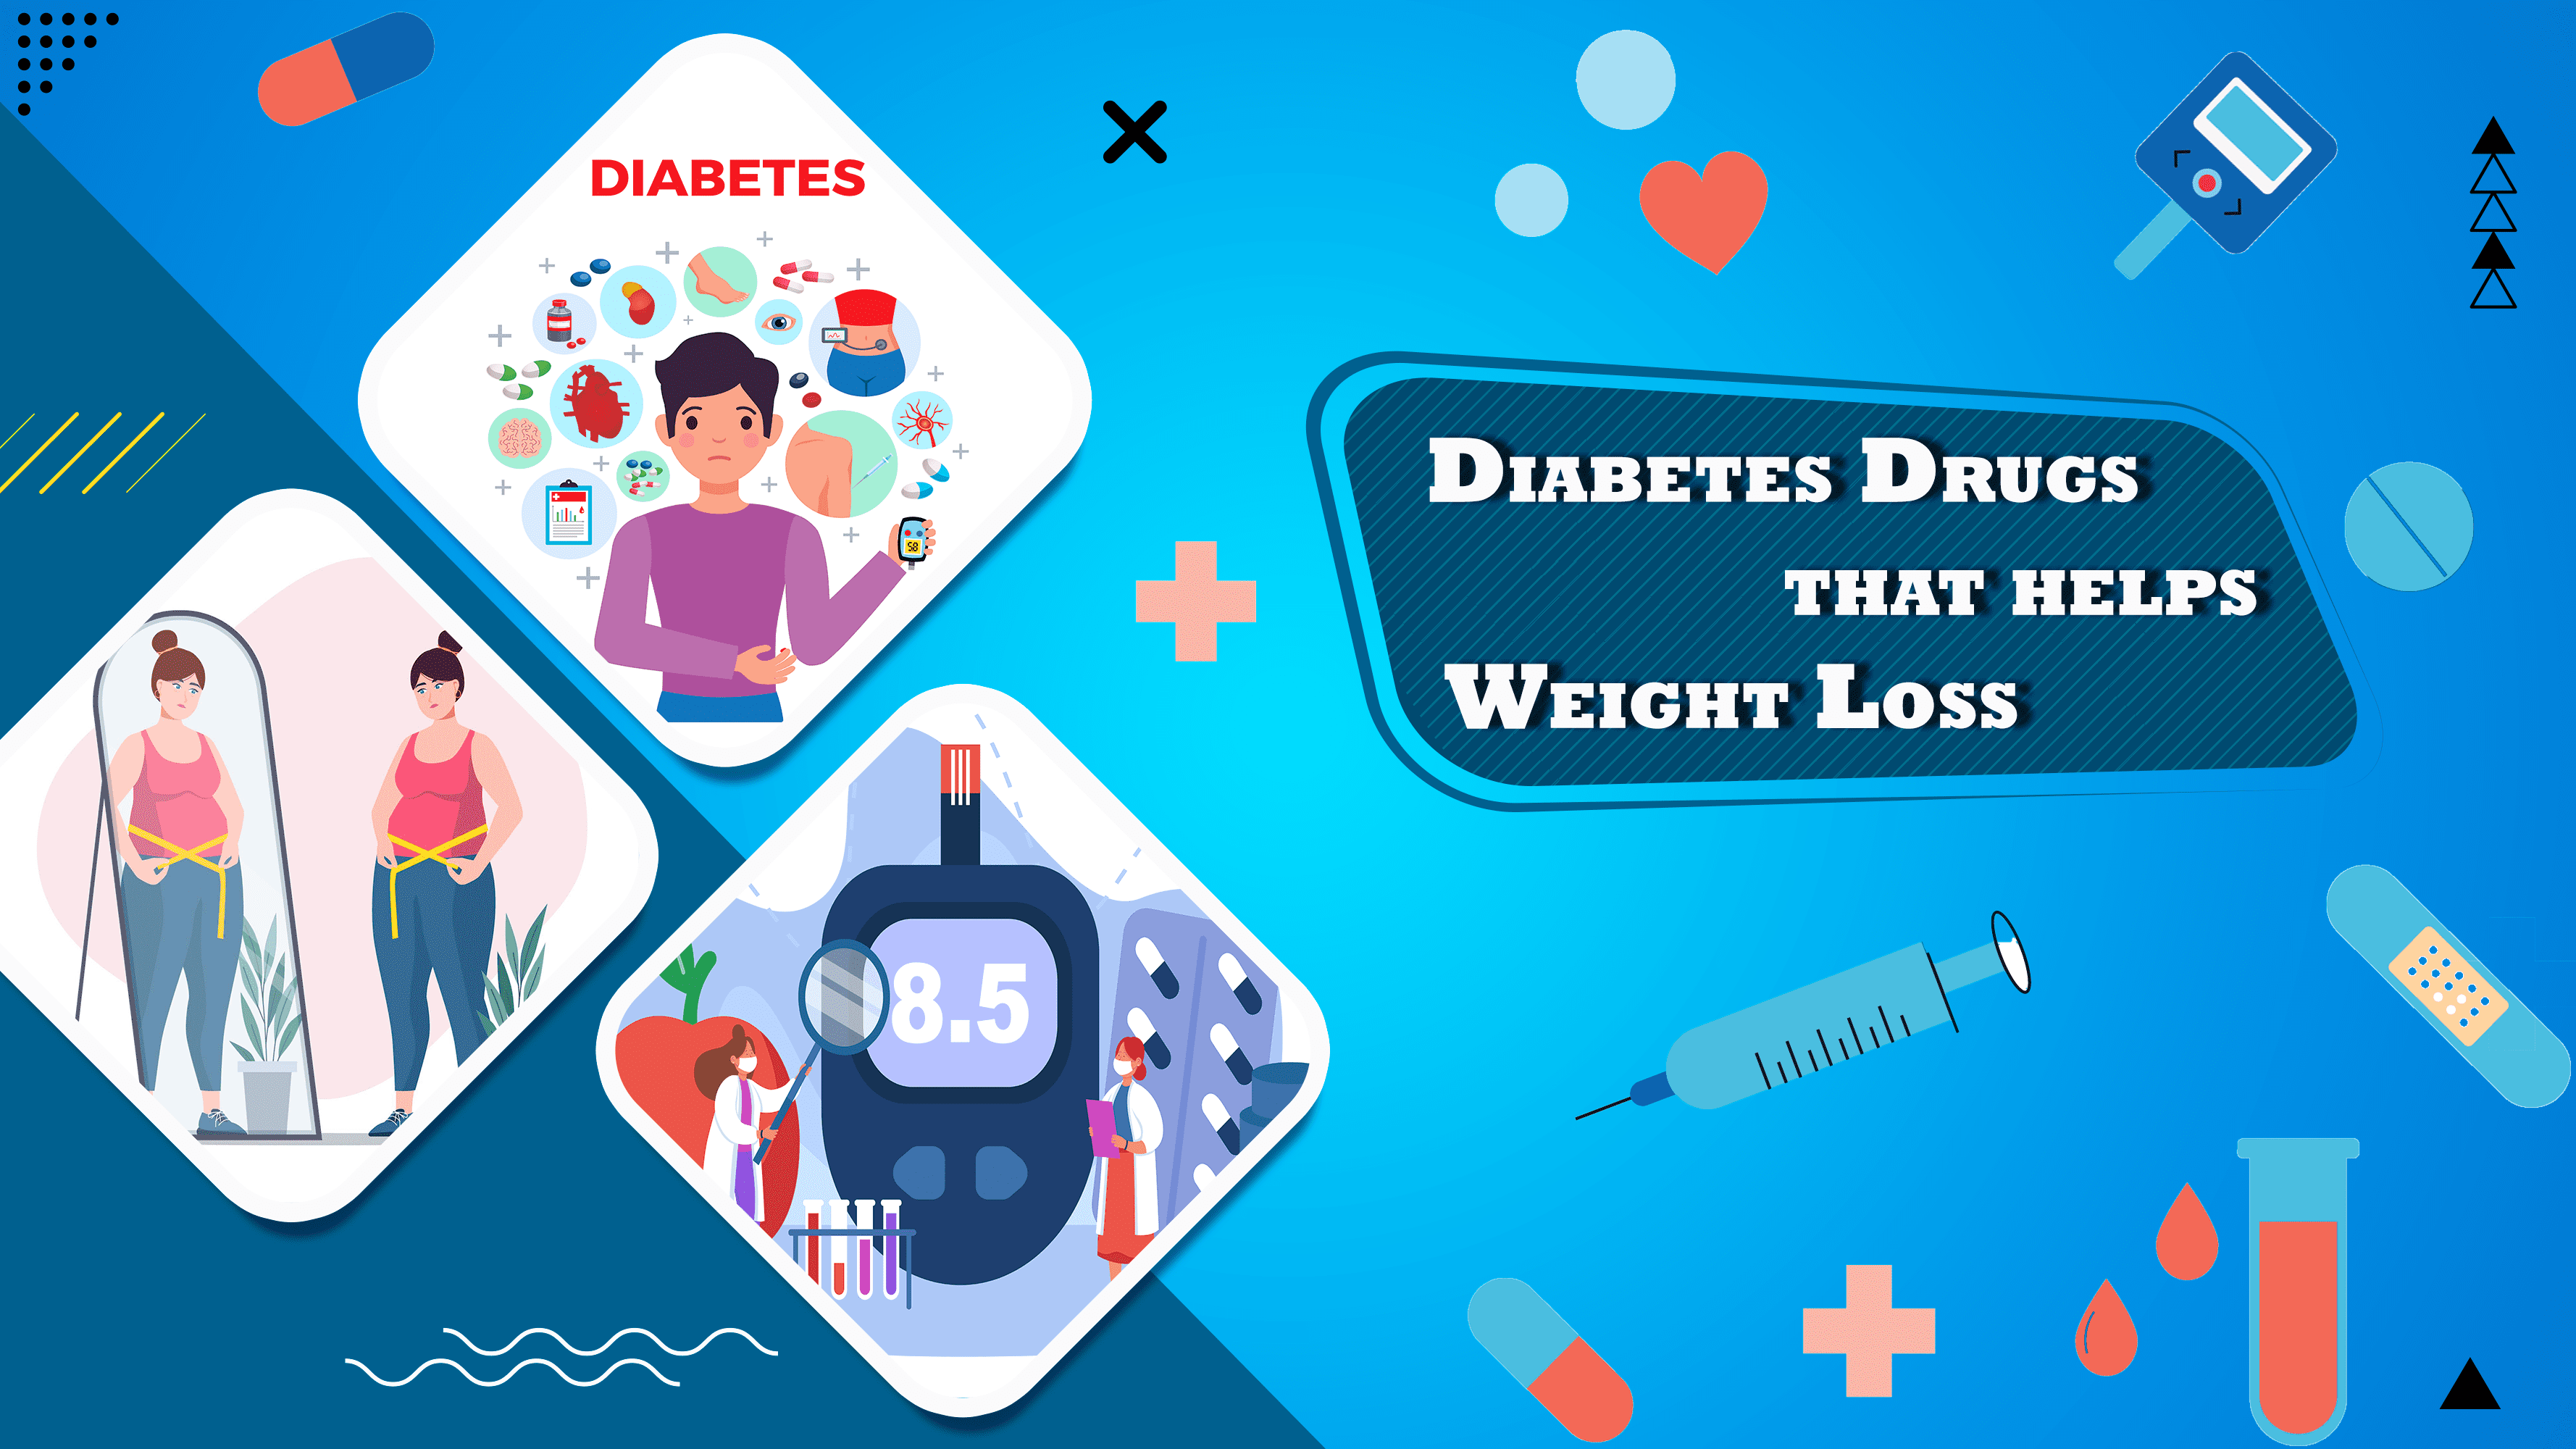 Diabetes drugs that helps weight loss | Diabetickart 23